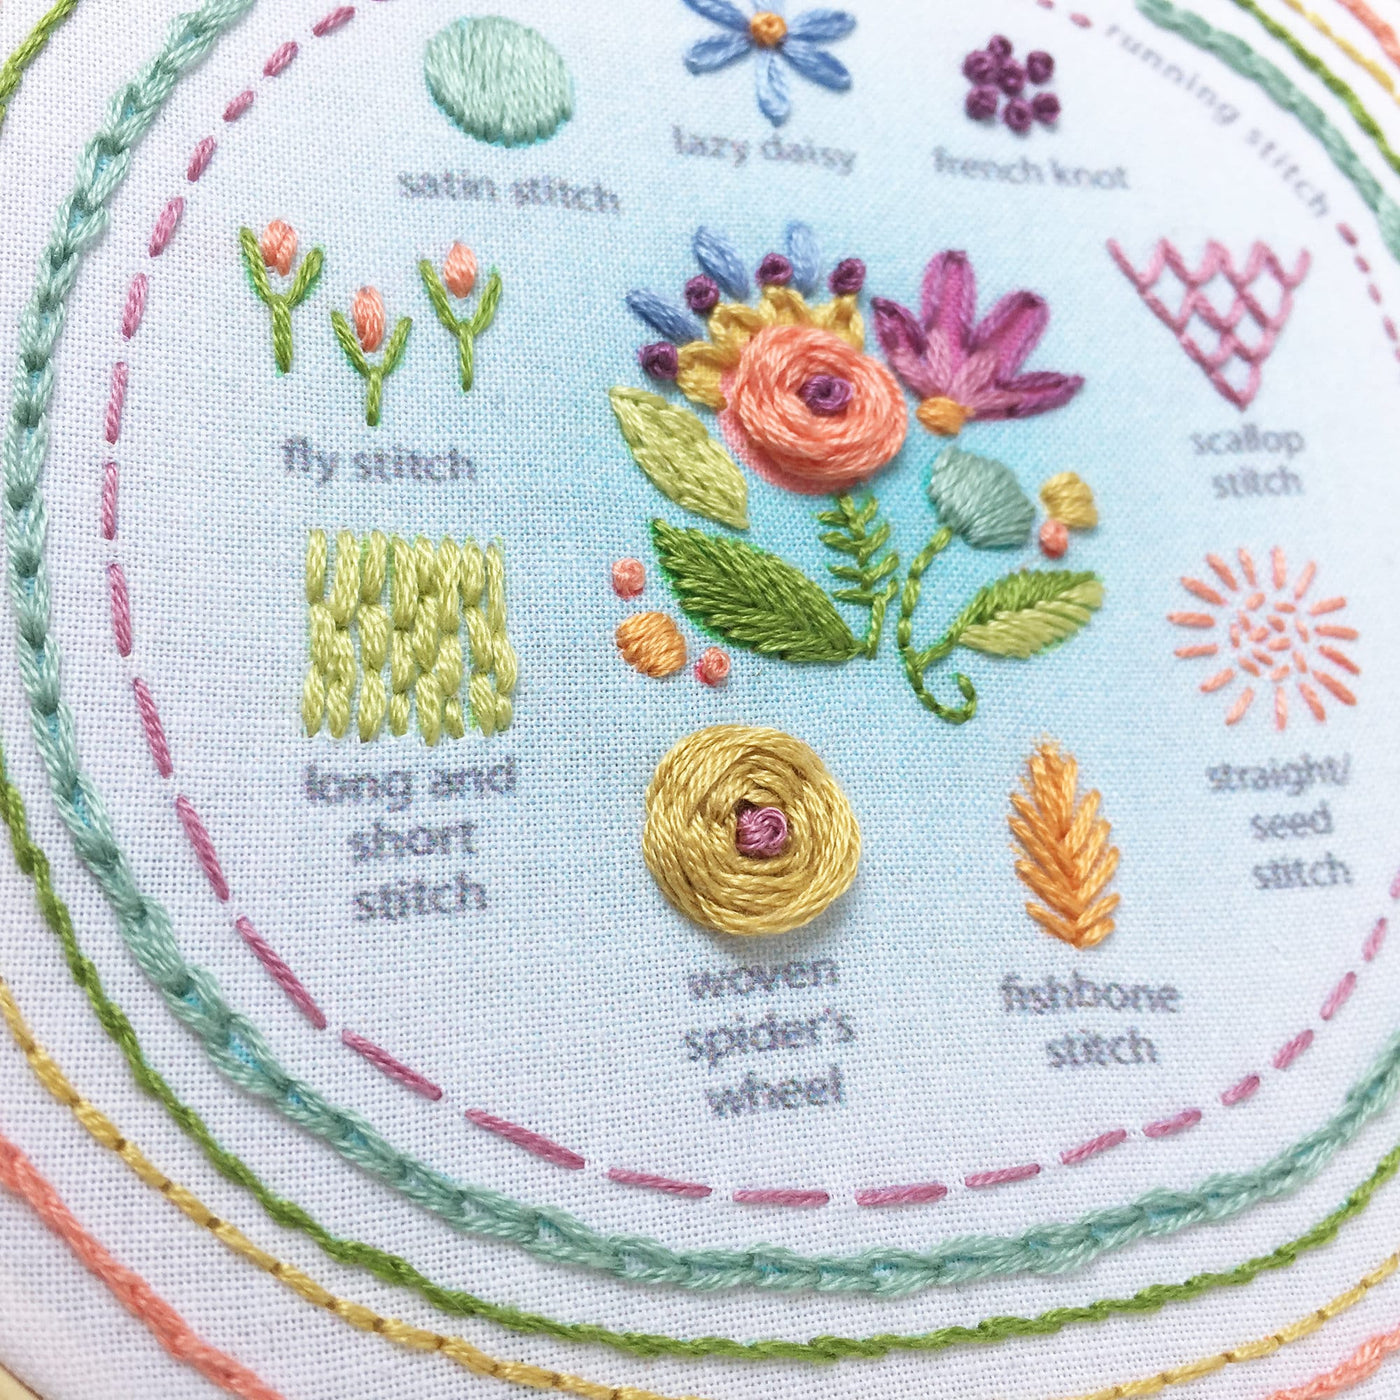 Stitch Sampler Beginner Embroidery fabric sampler